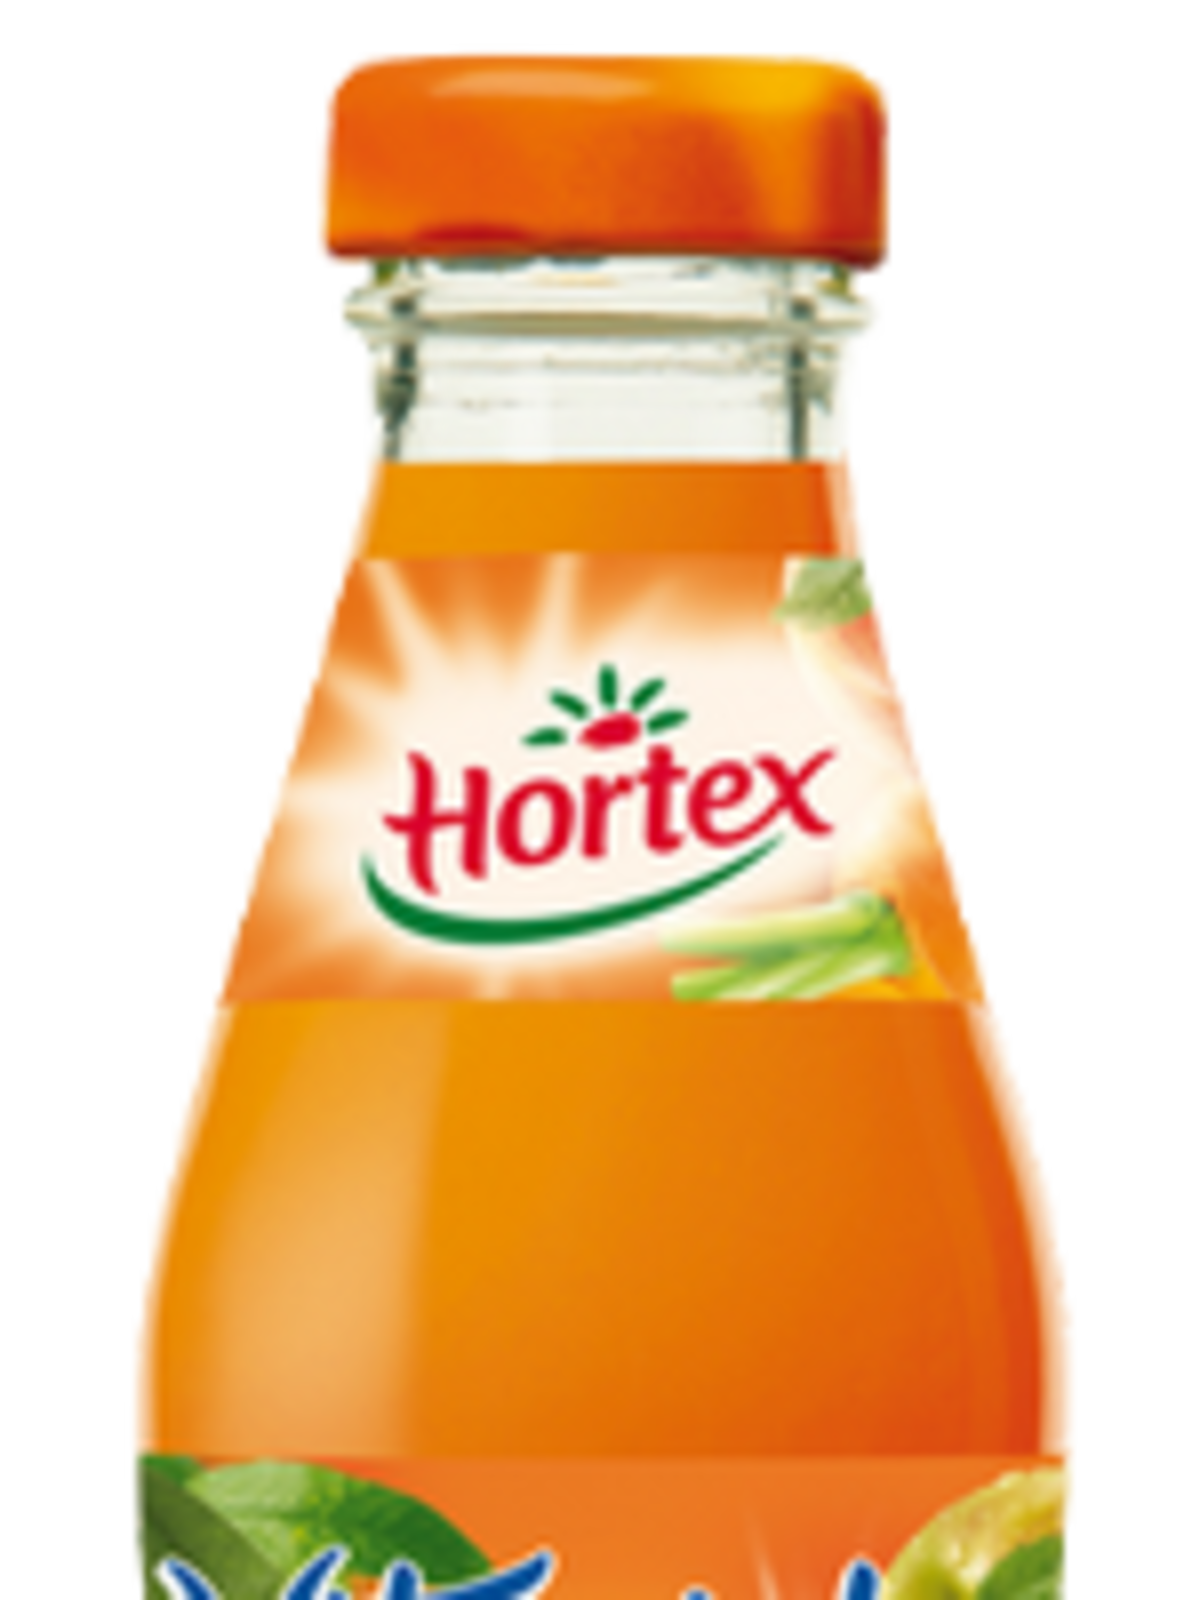 Hortex, sok Vitaminka